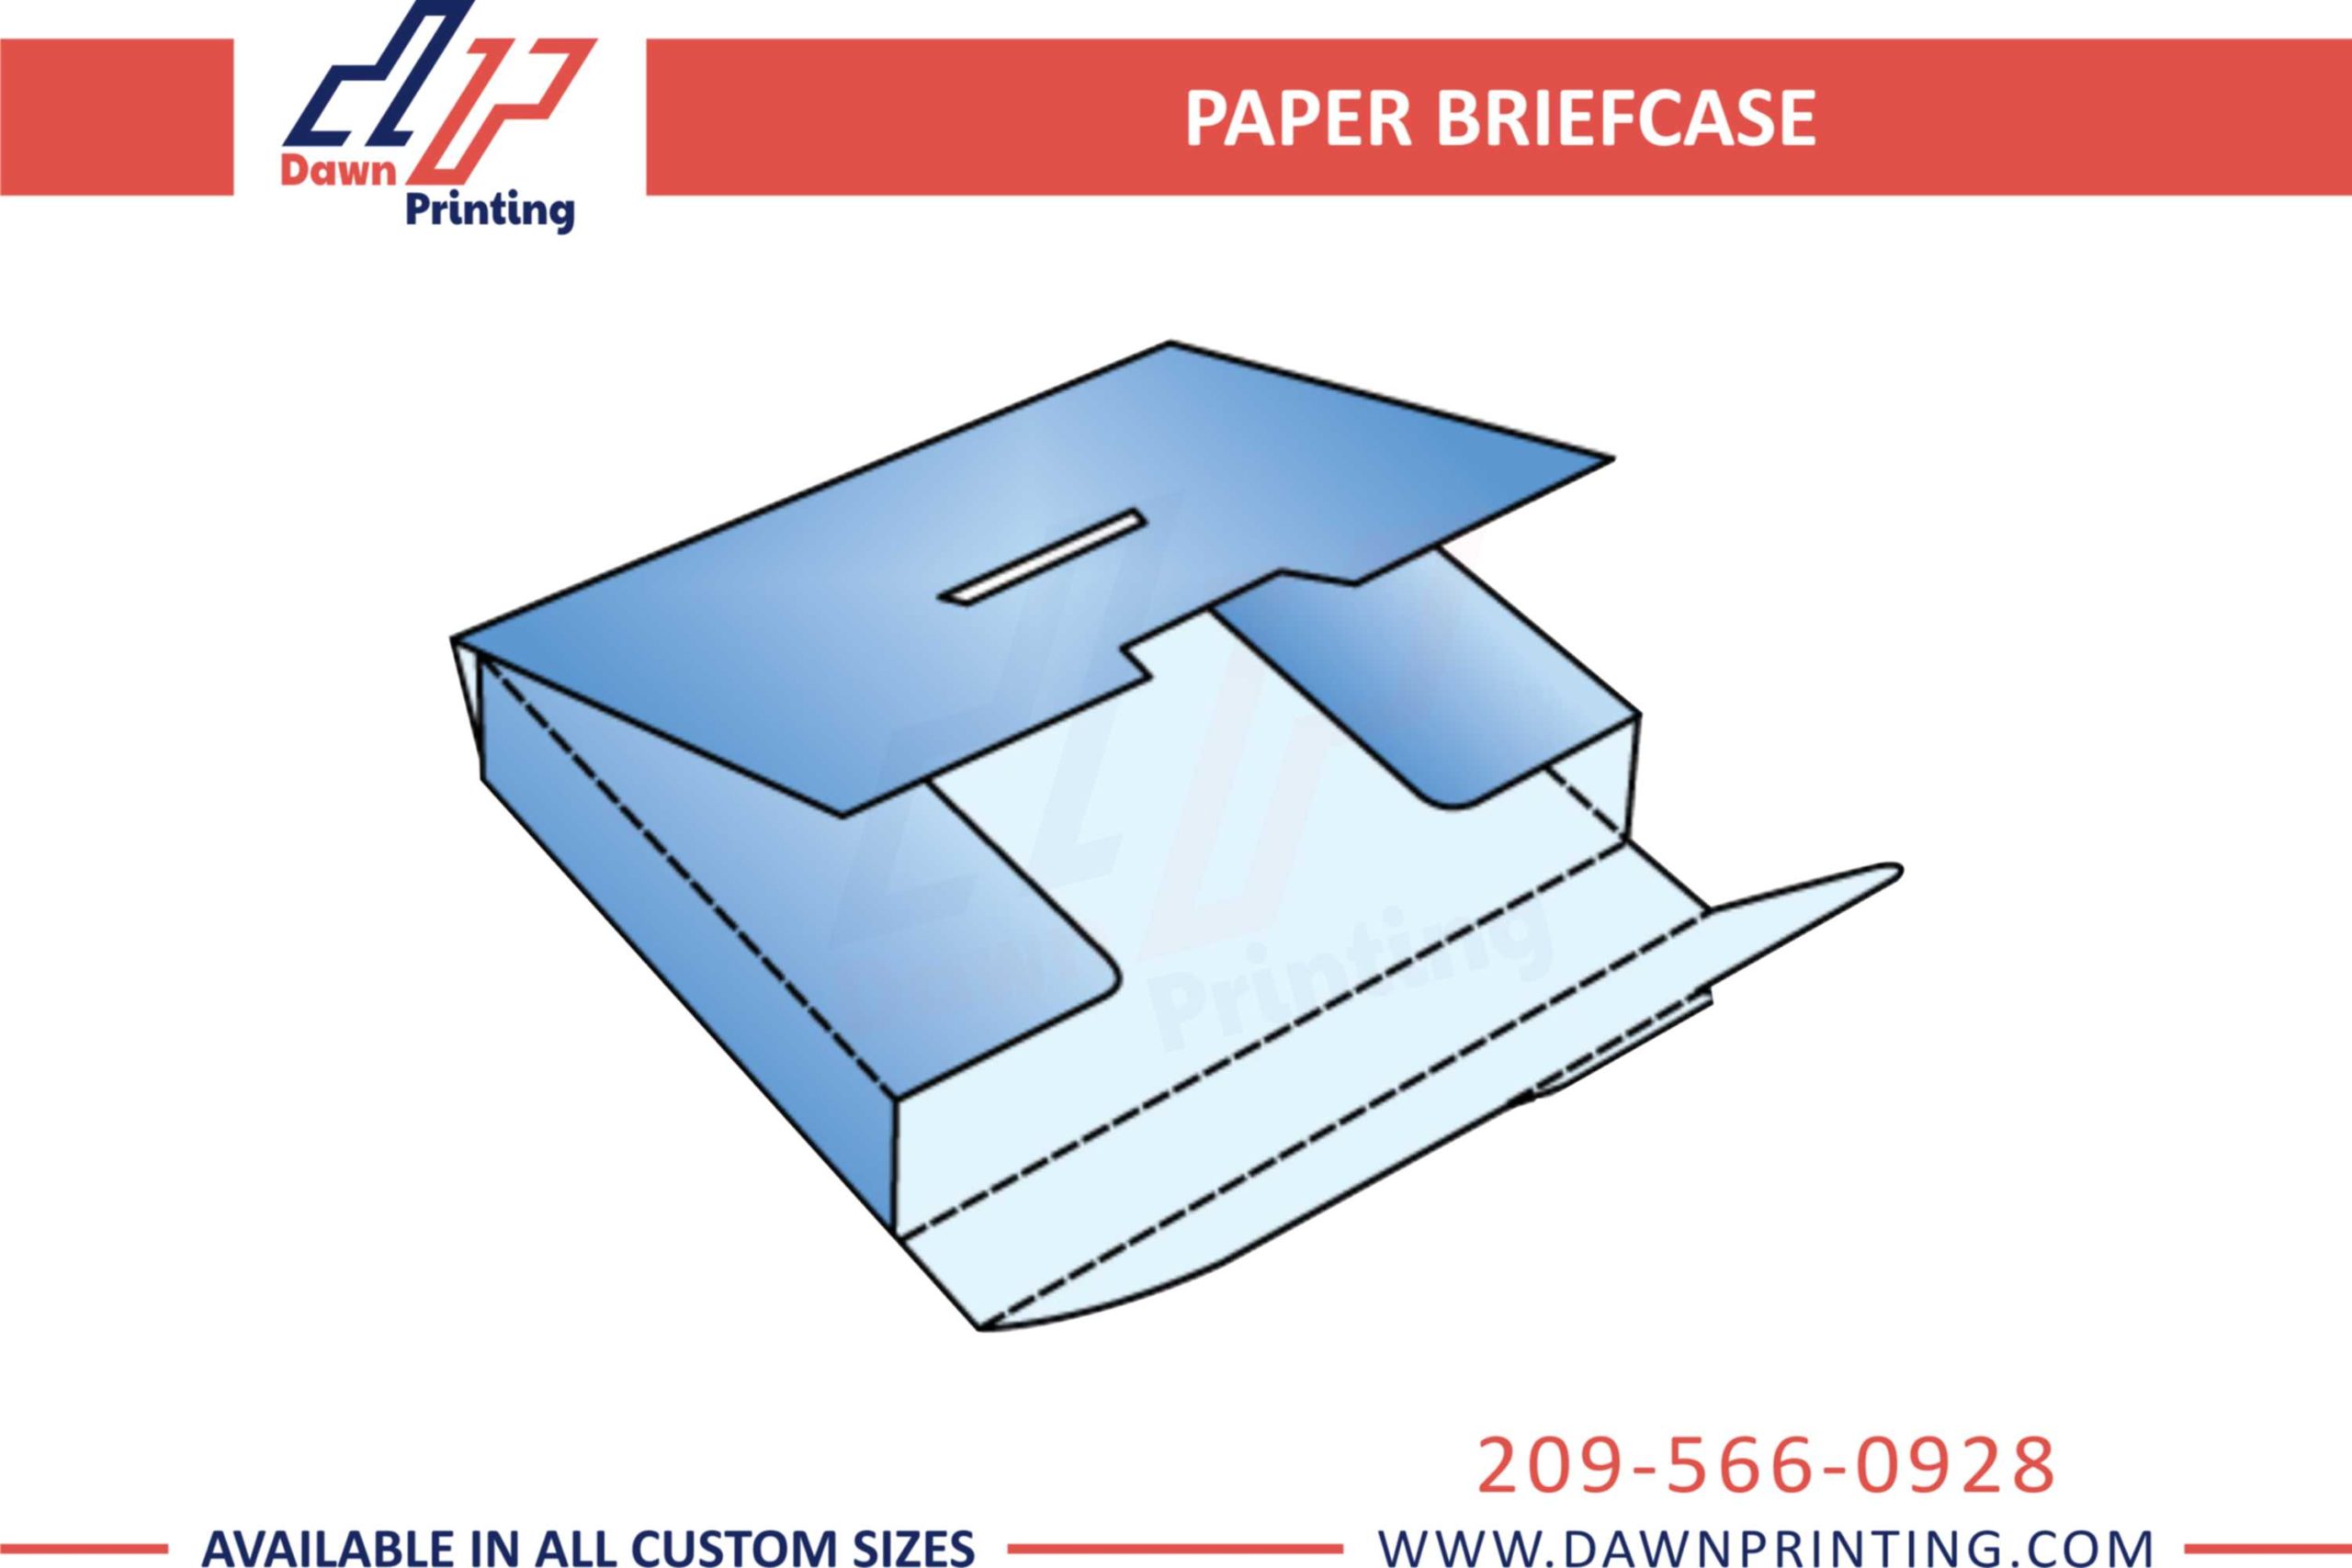 Custom Paper Brief Case - Dawn Printing